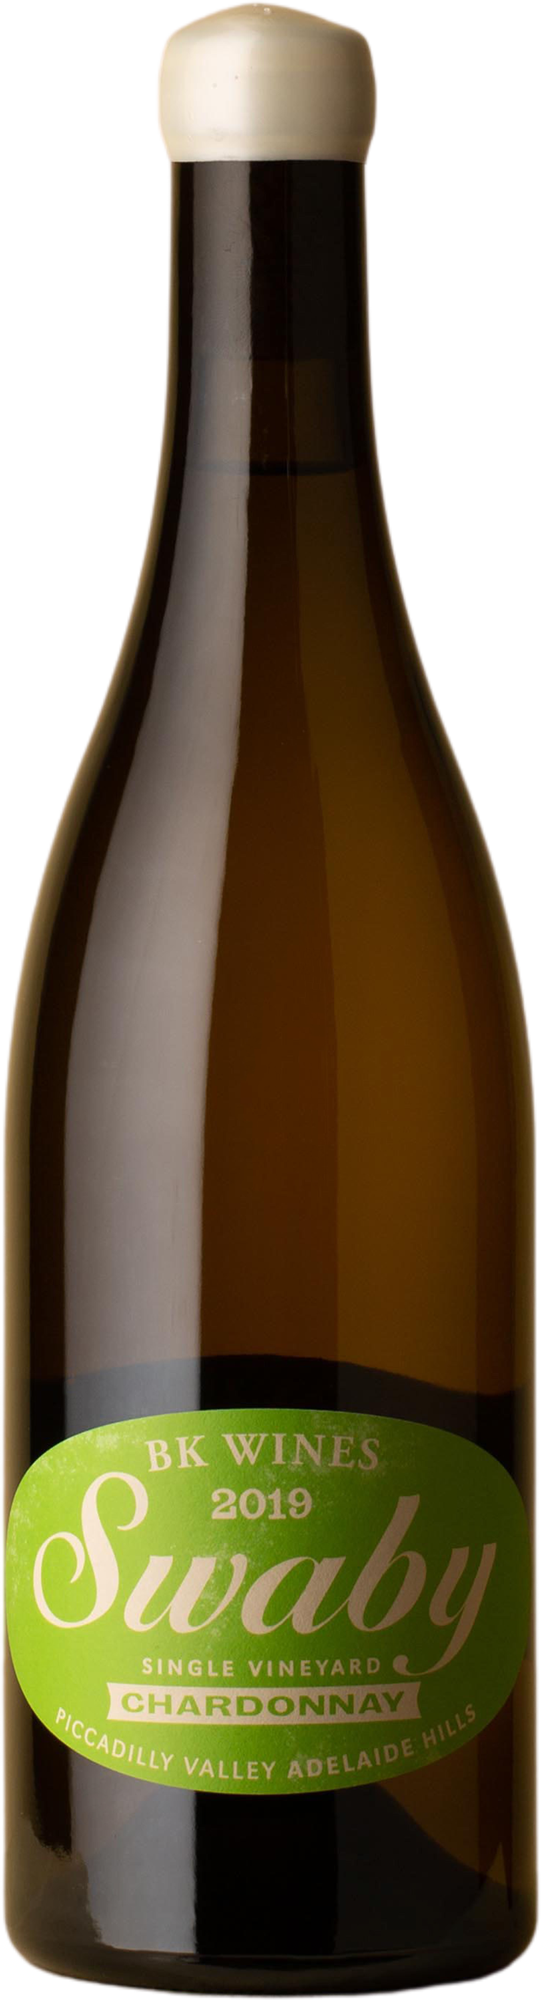 BK Wines - Swaby Chardonnay 2019 White Wine